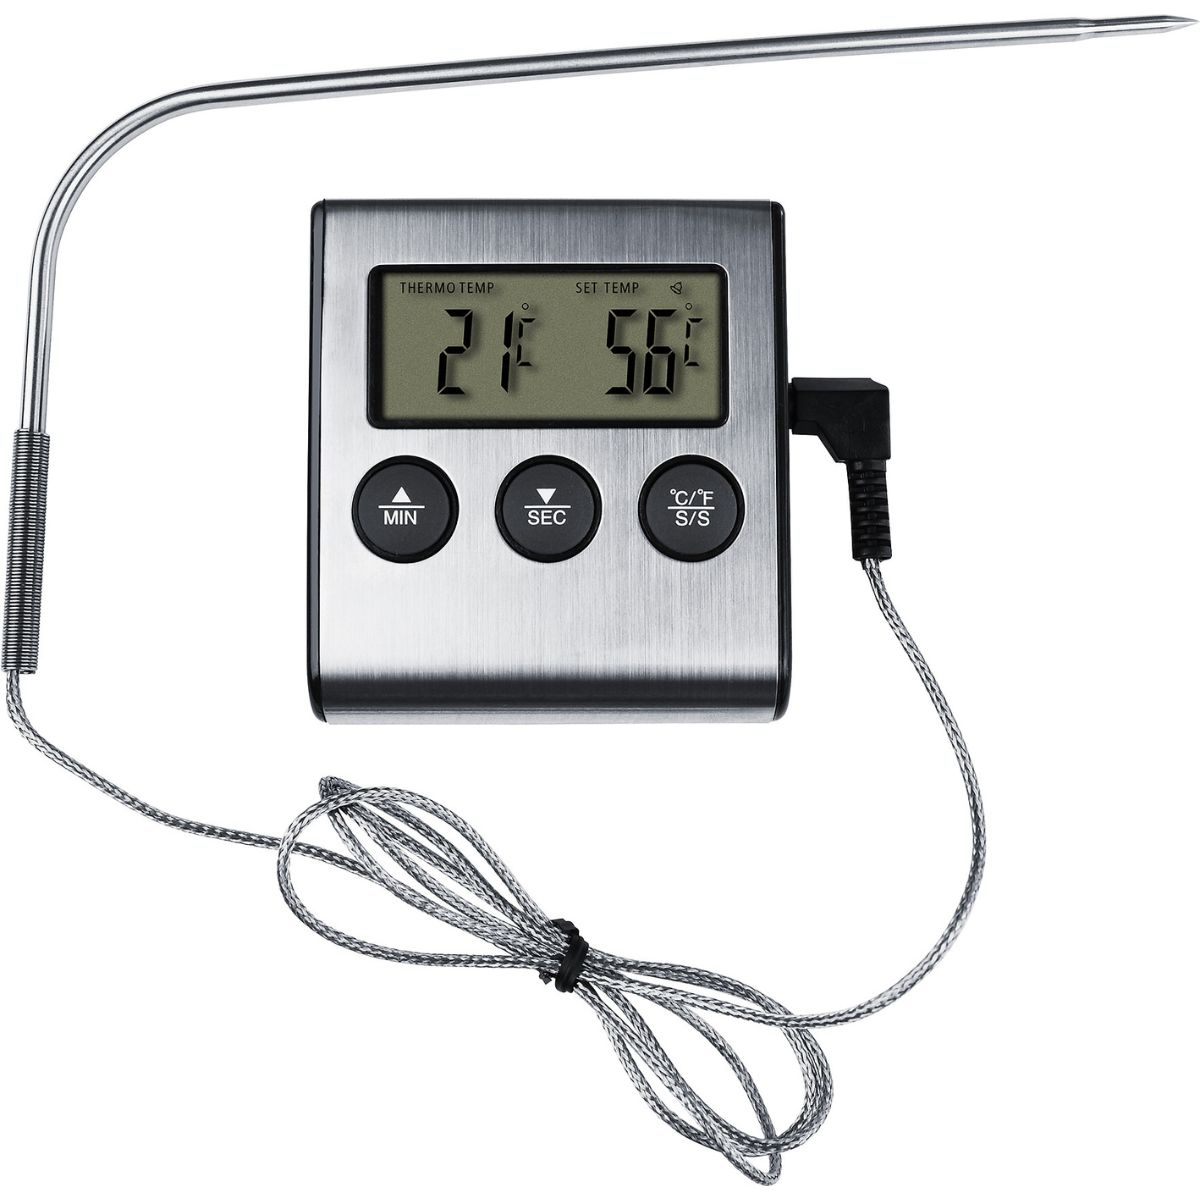 STEBA AC 11 Digitales Bratenthermometer, Silber